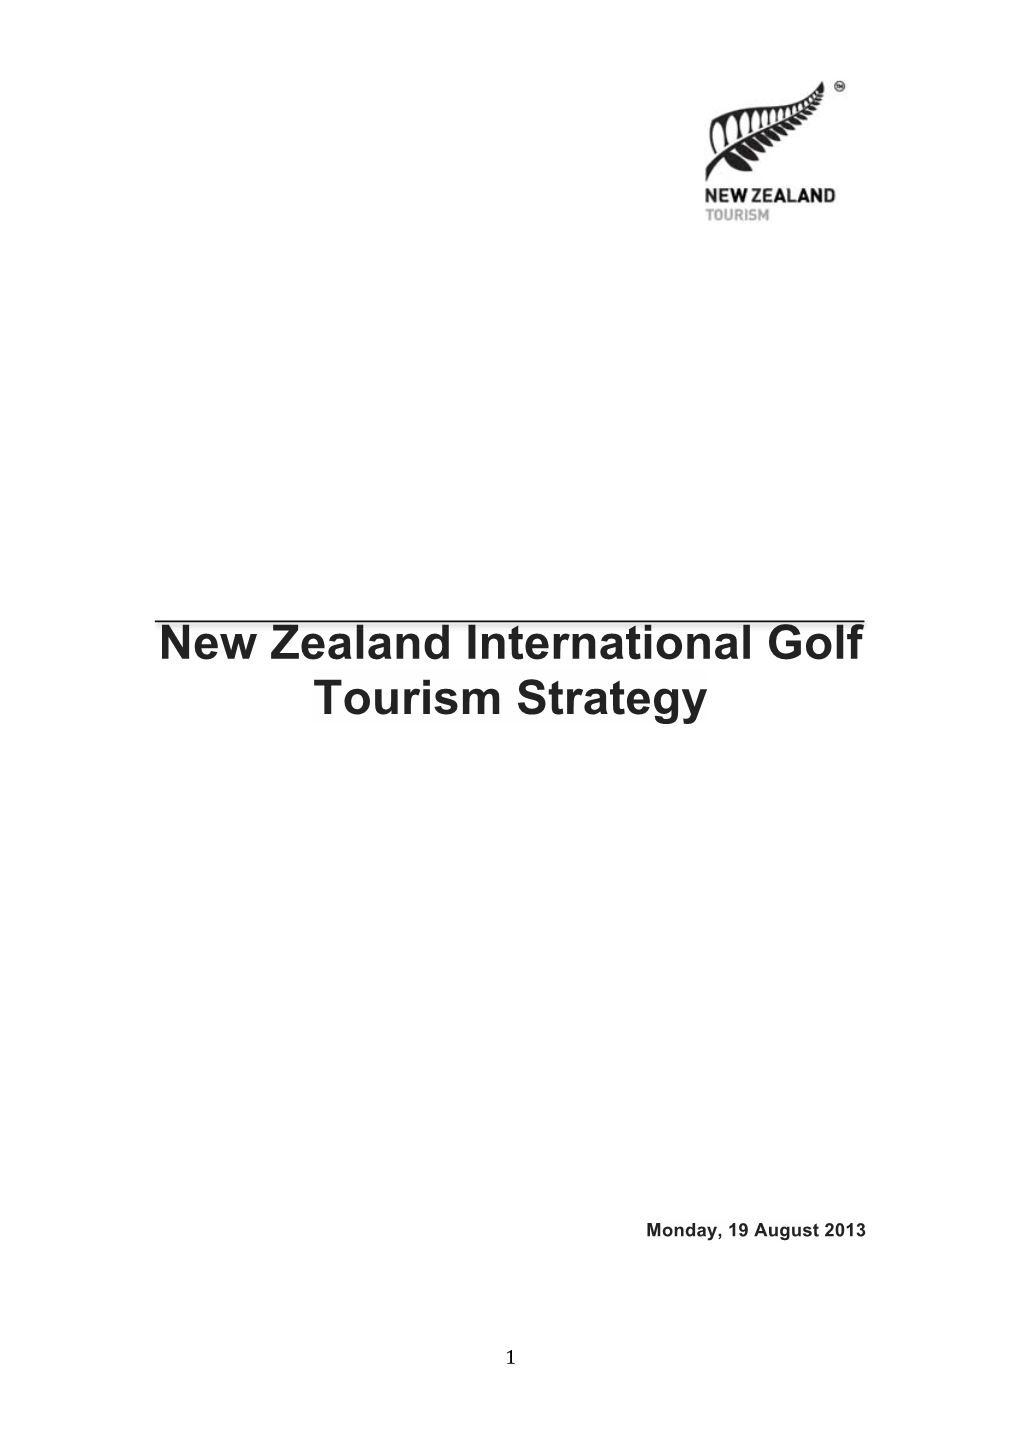 New Zealand International Golf Tourism Strategy